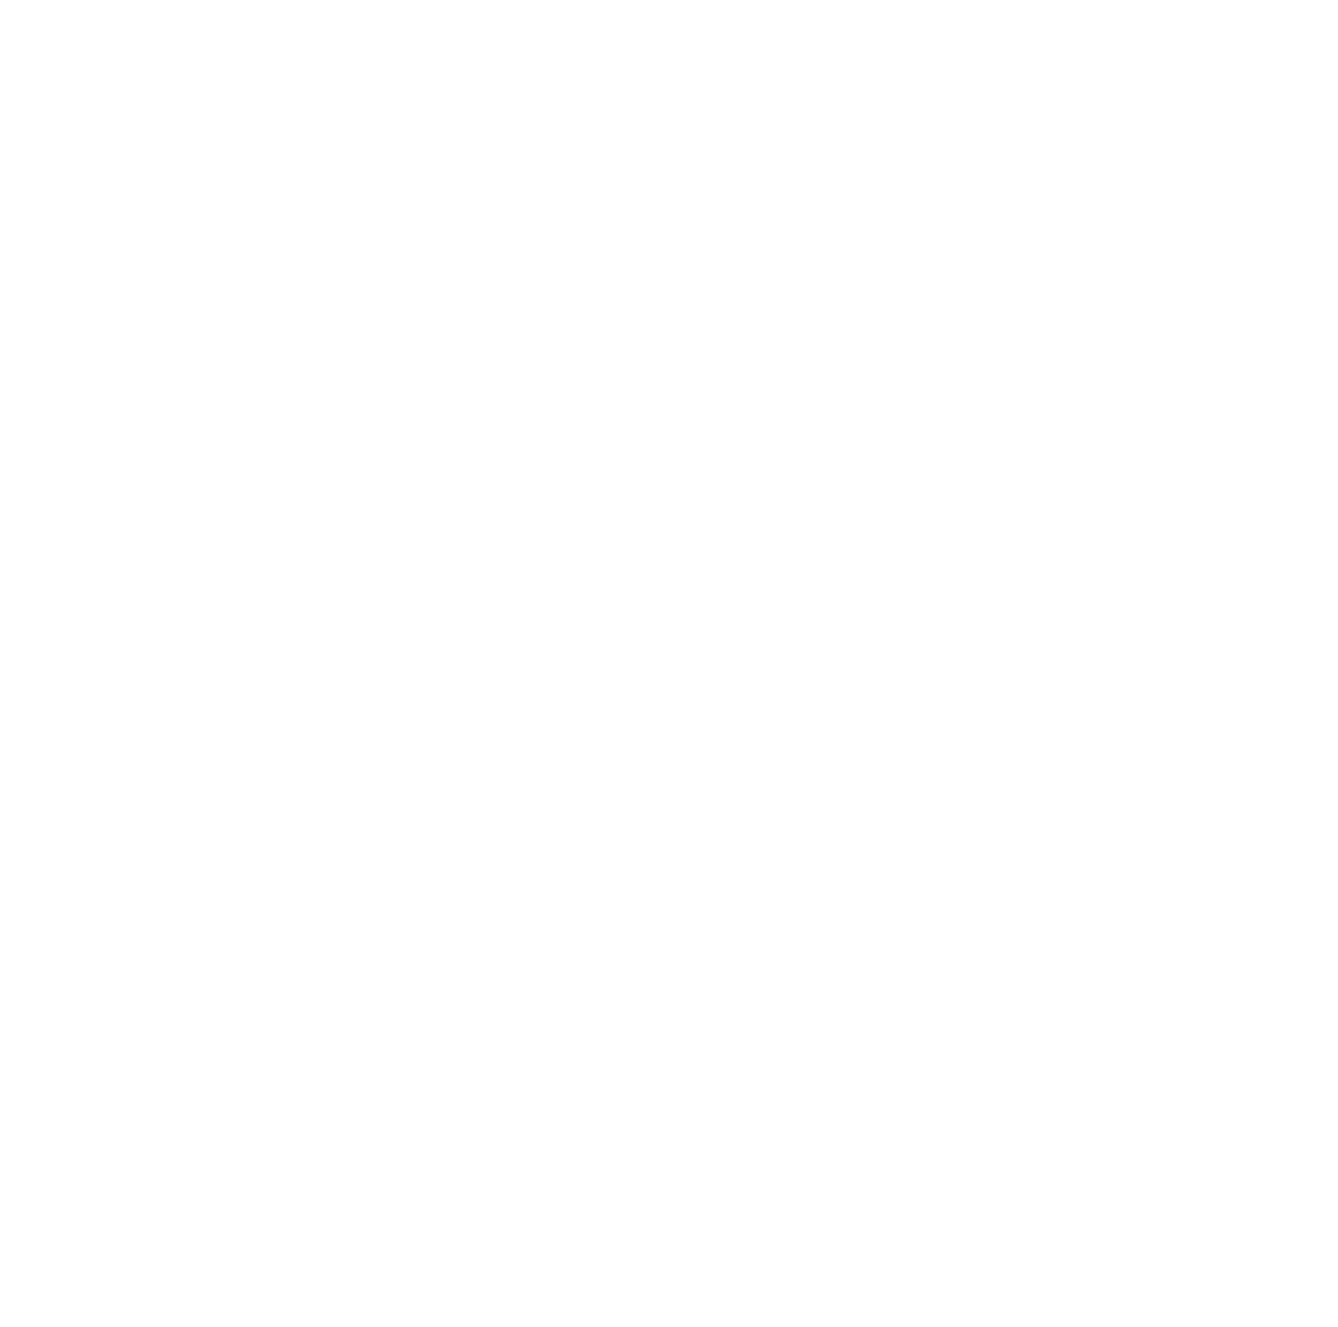 NAACP_logo-1.png (196 KB)